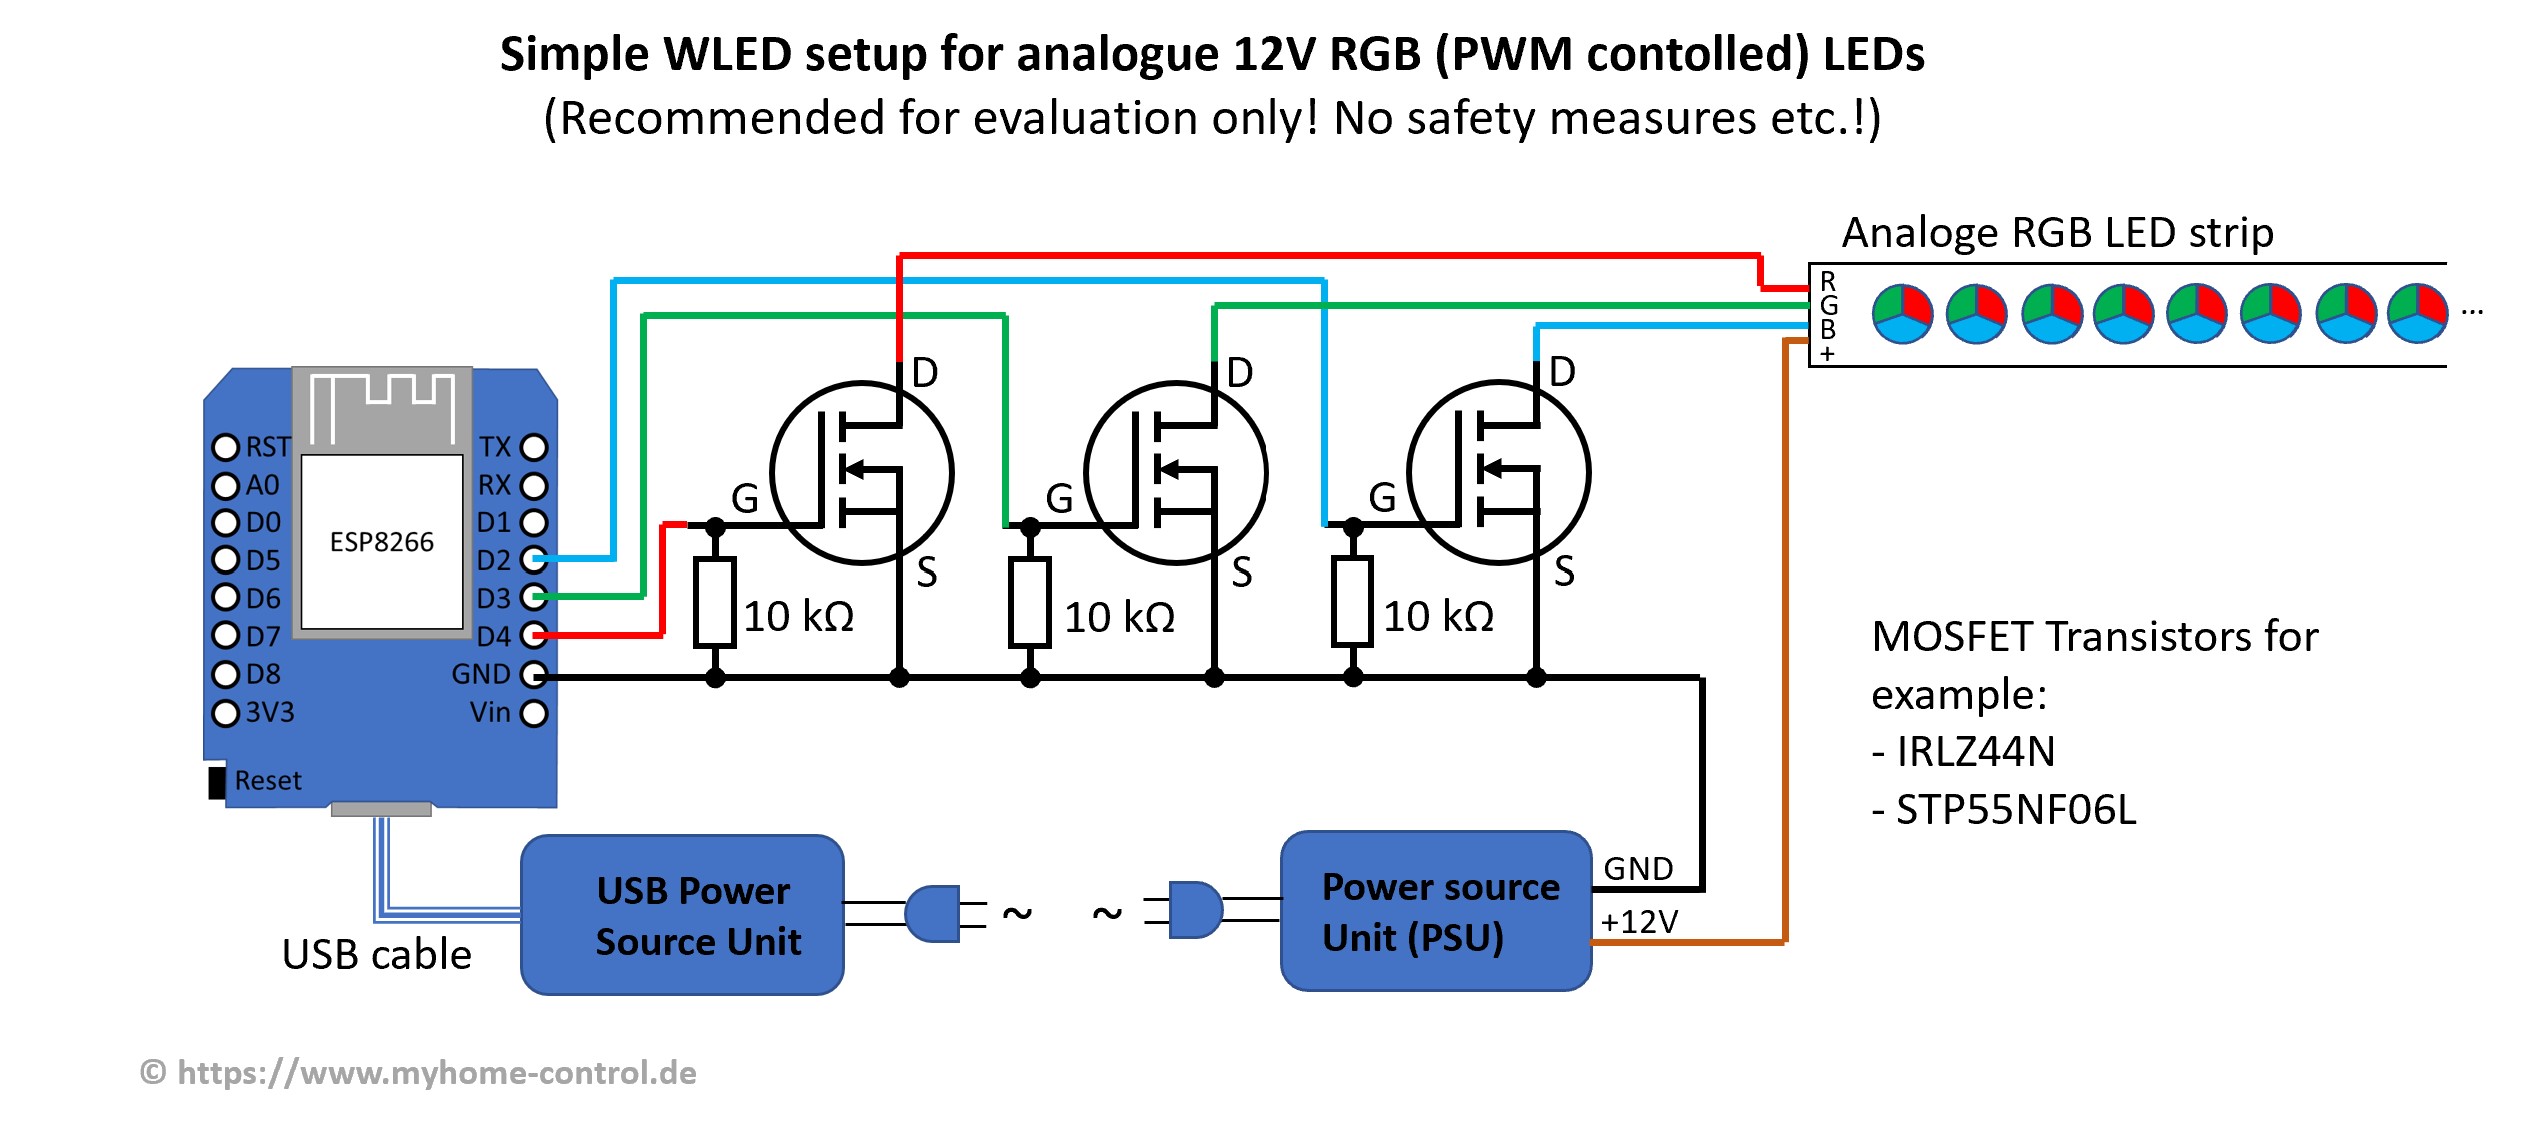 Controlling analog LED strios